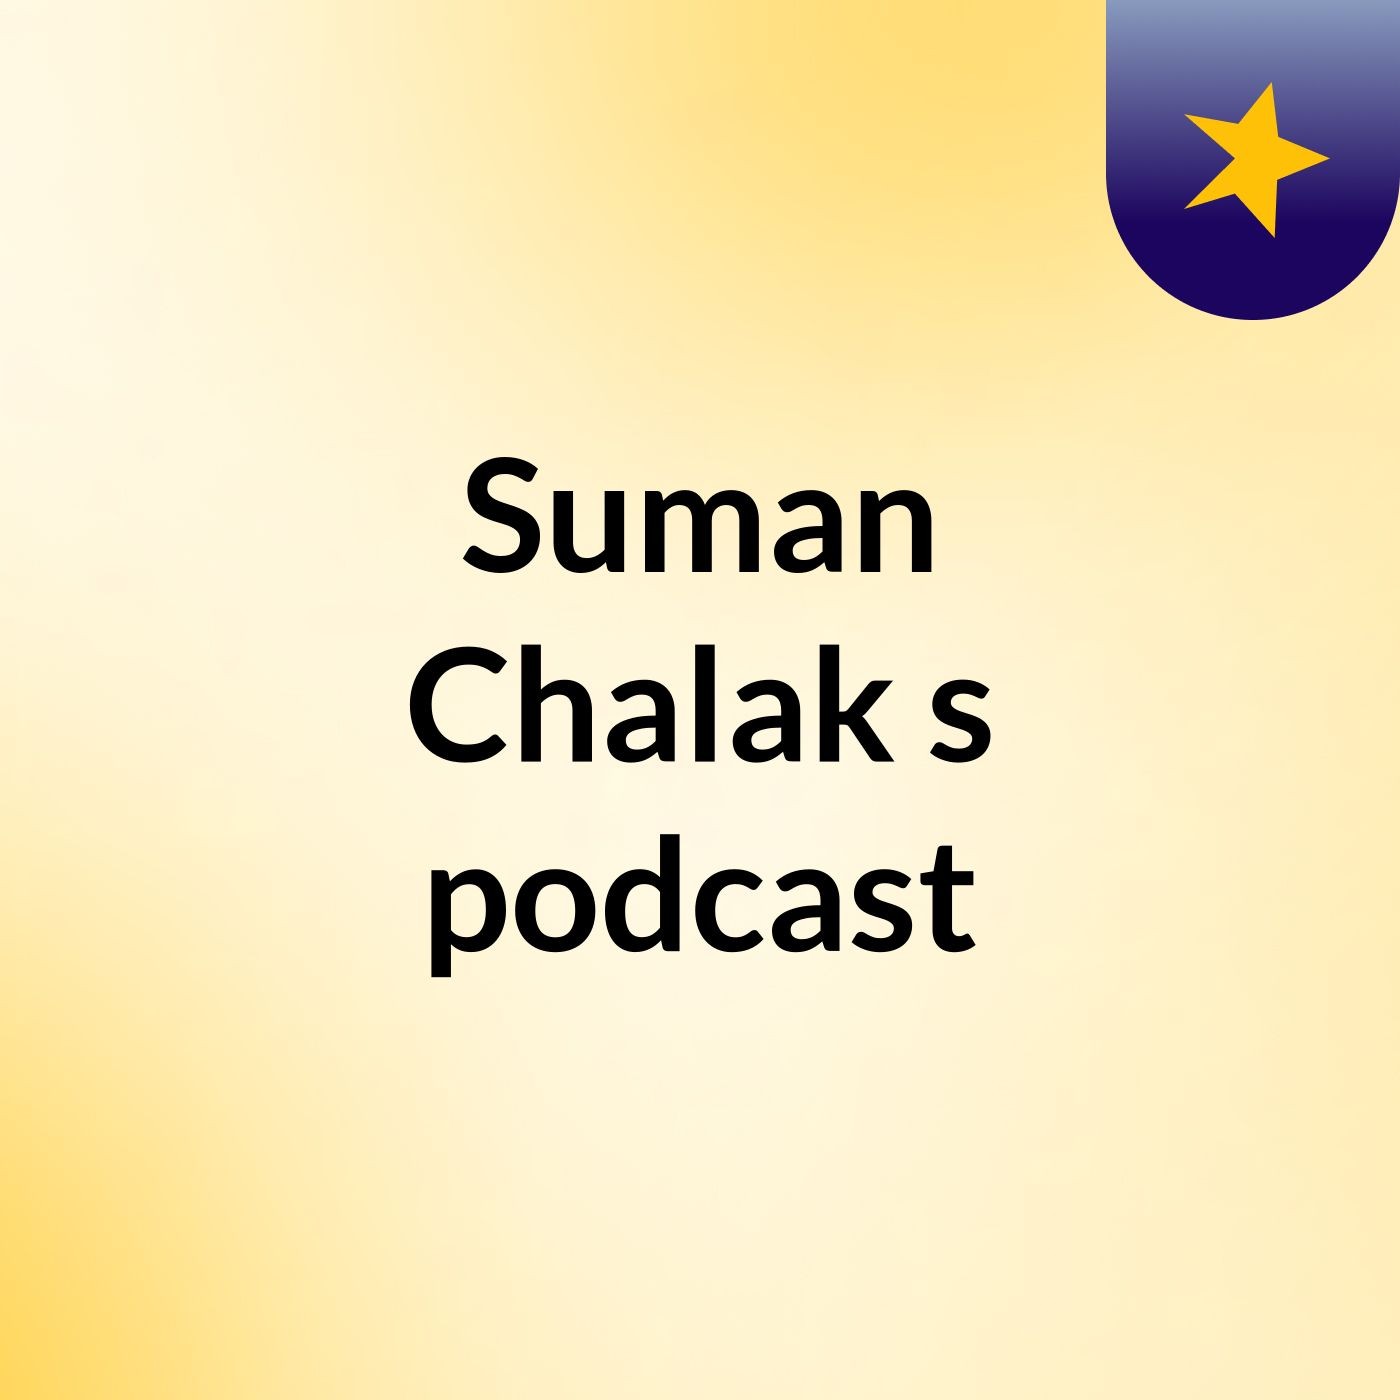 Suman Chalak's podcast